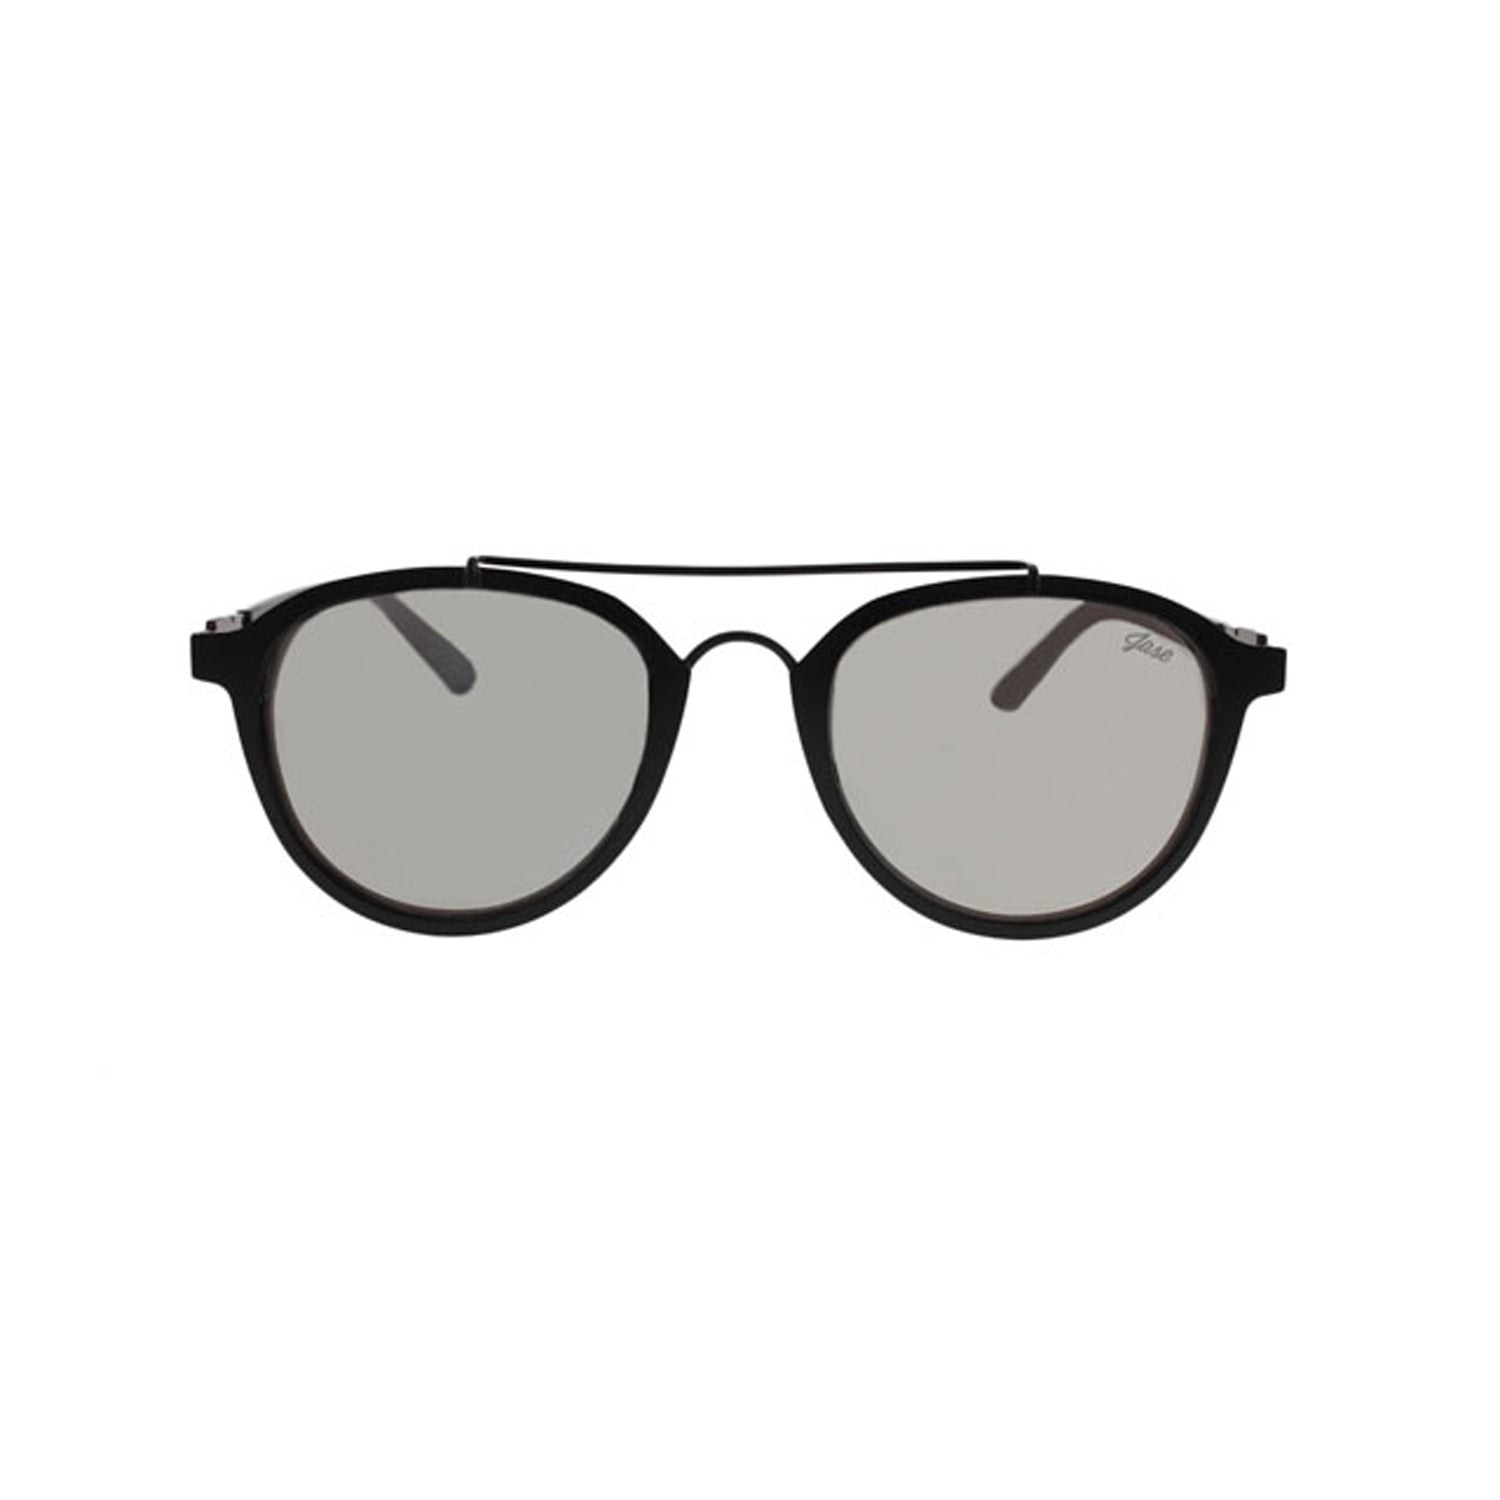 Jase New York Jackson Sunglasses in Matte Black